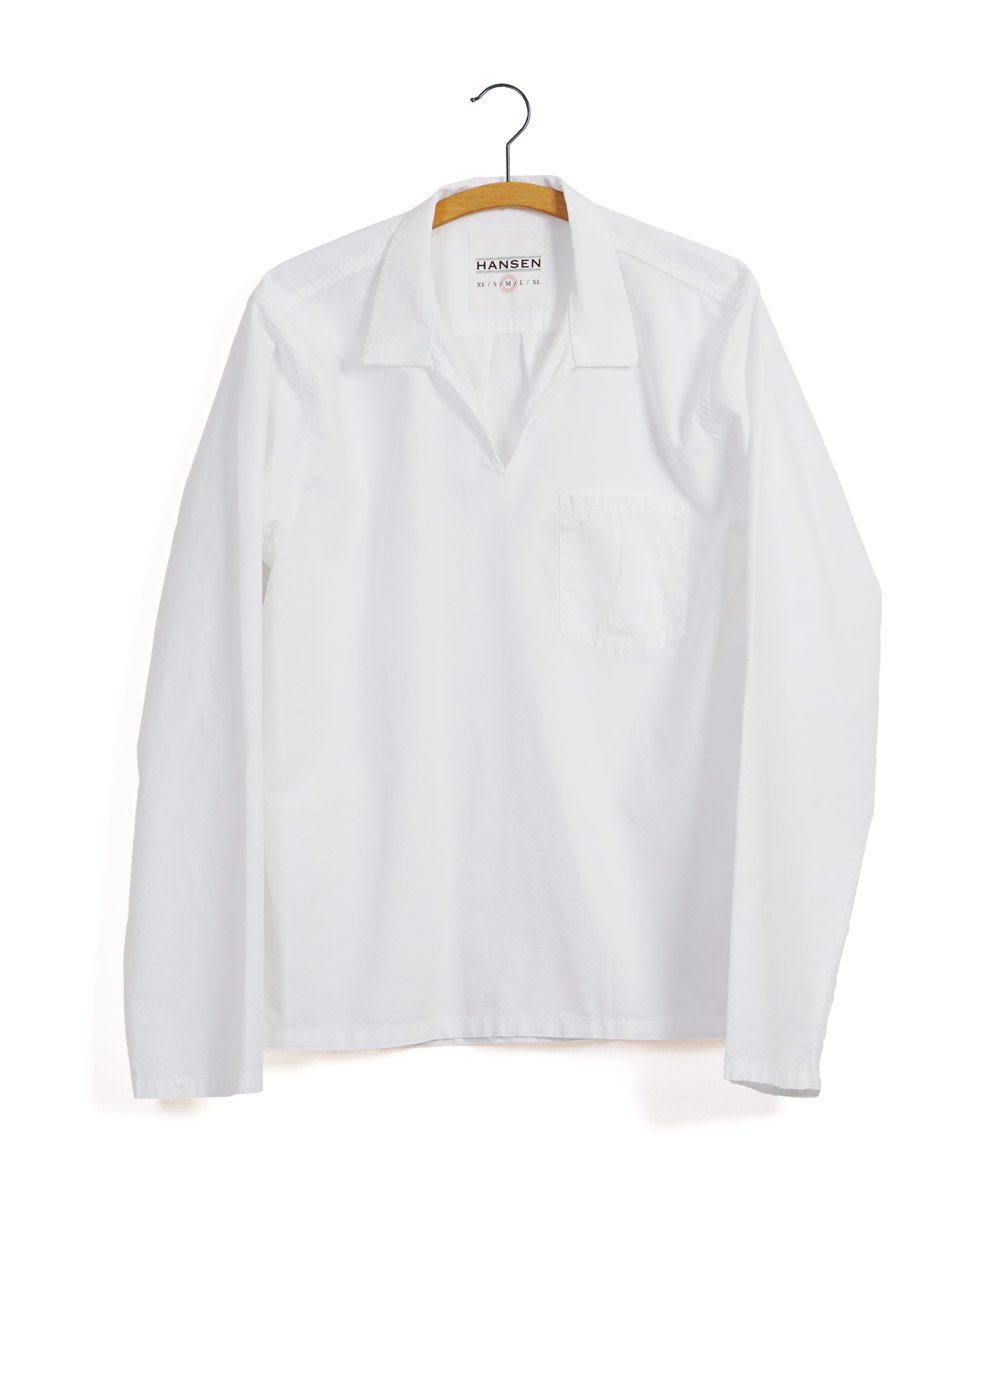 MARIUS | Casual Pull On Shirt | White -HANSEN Garments- HANSEN Garments